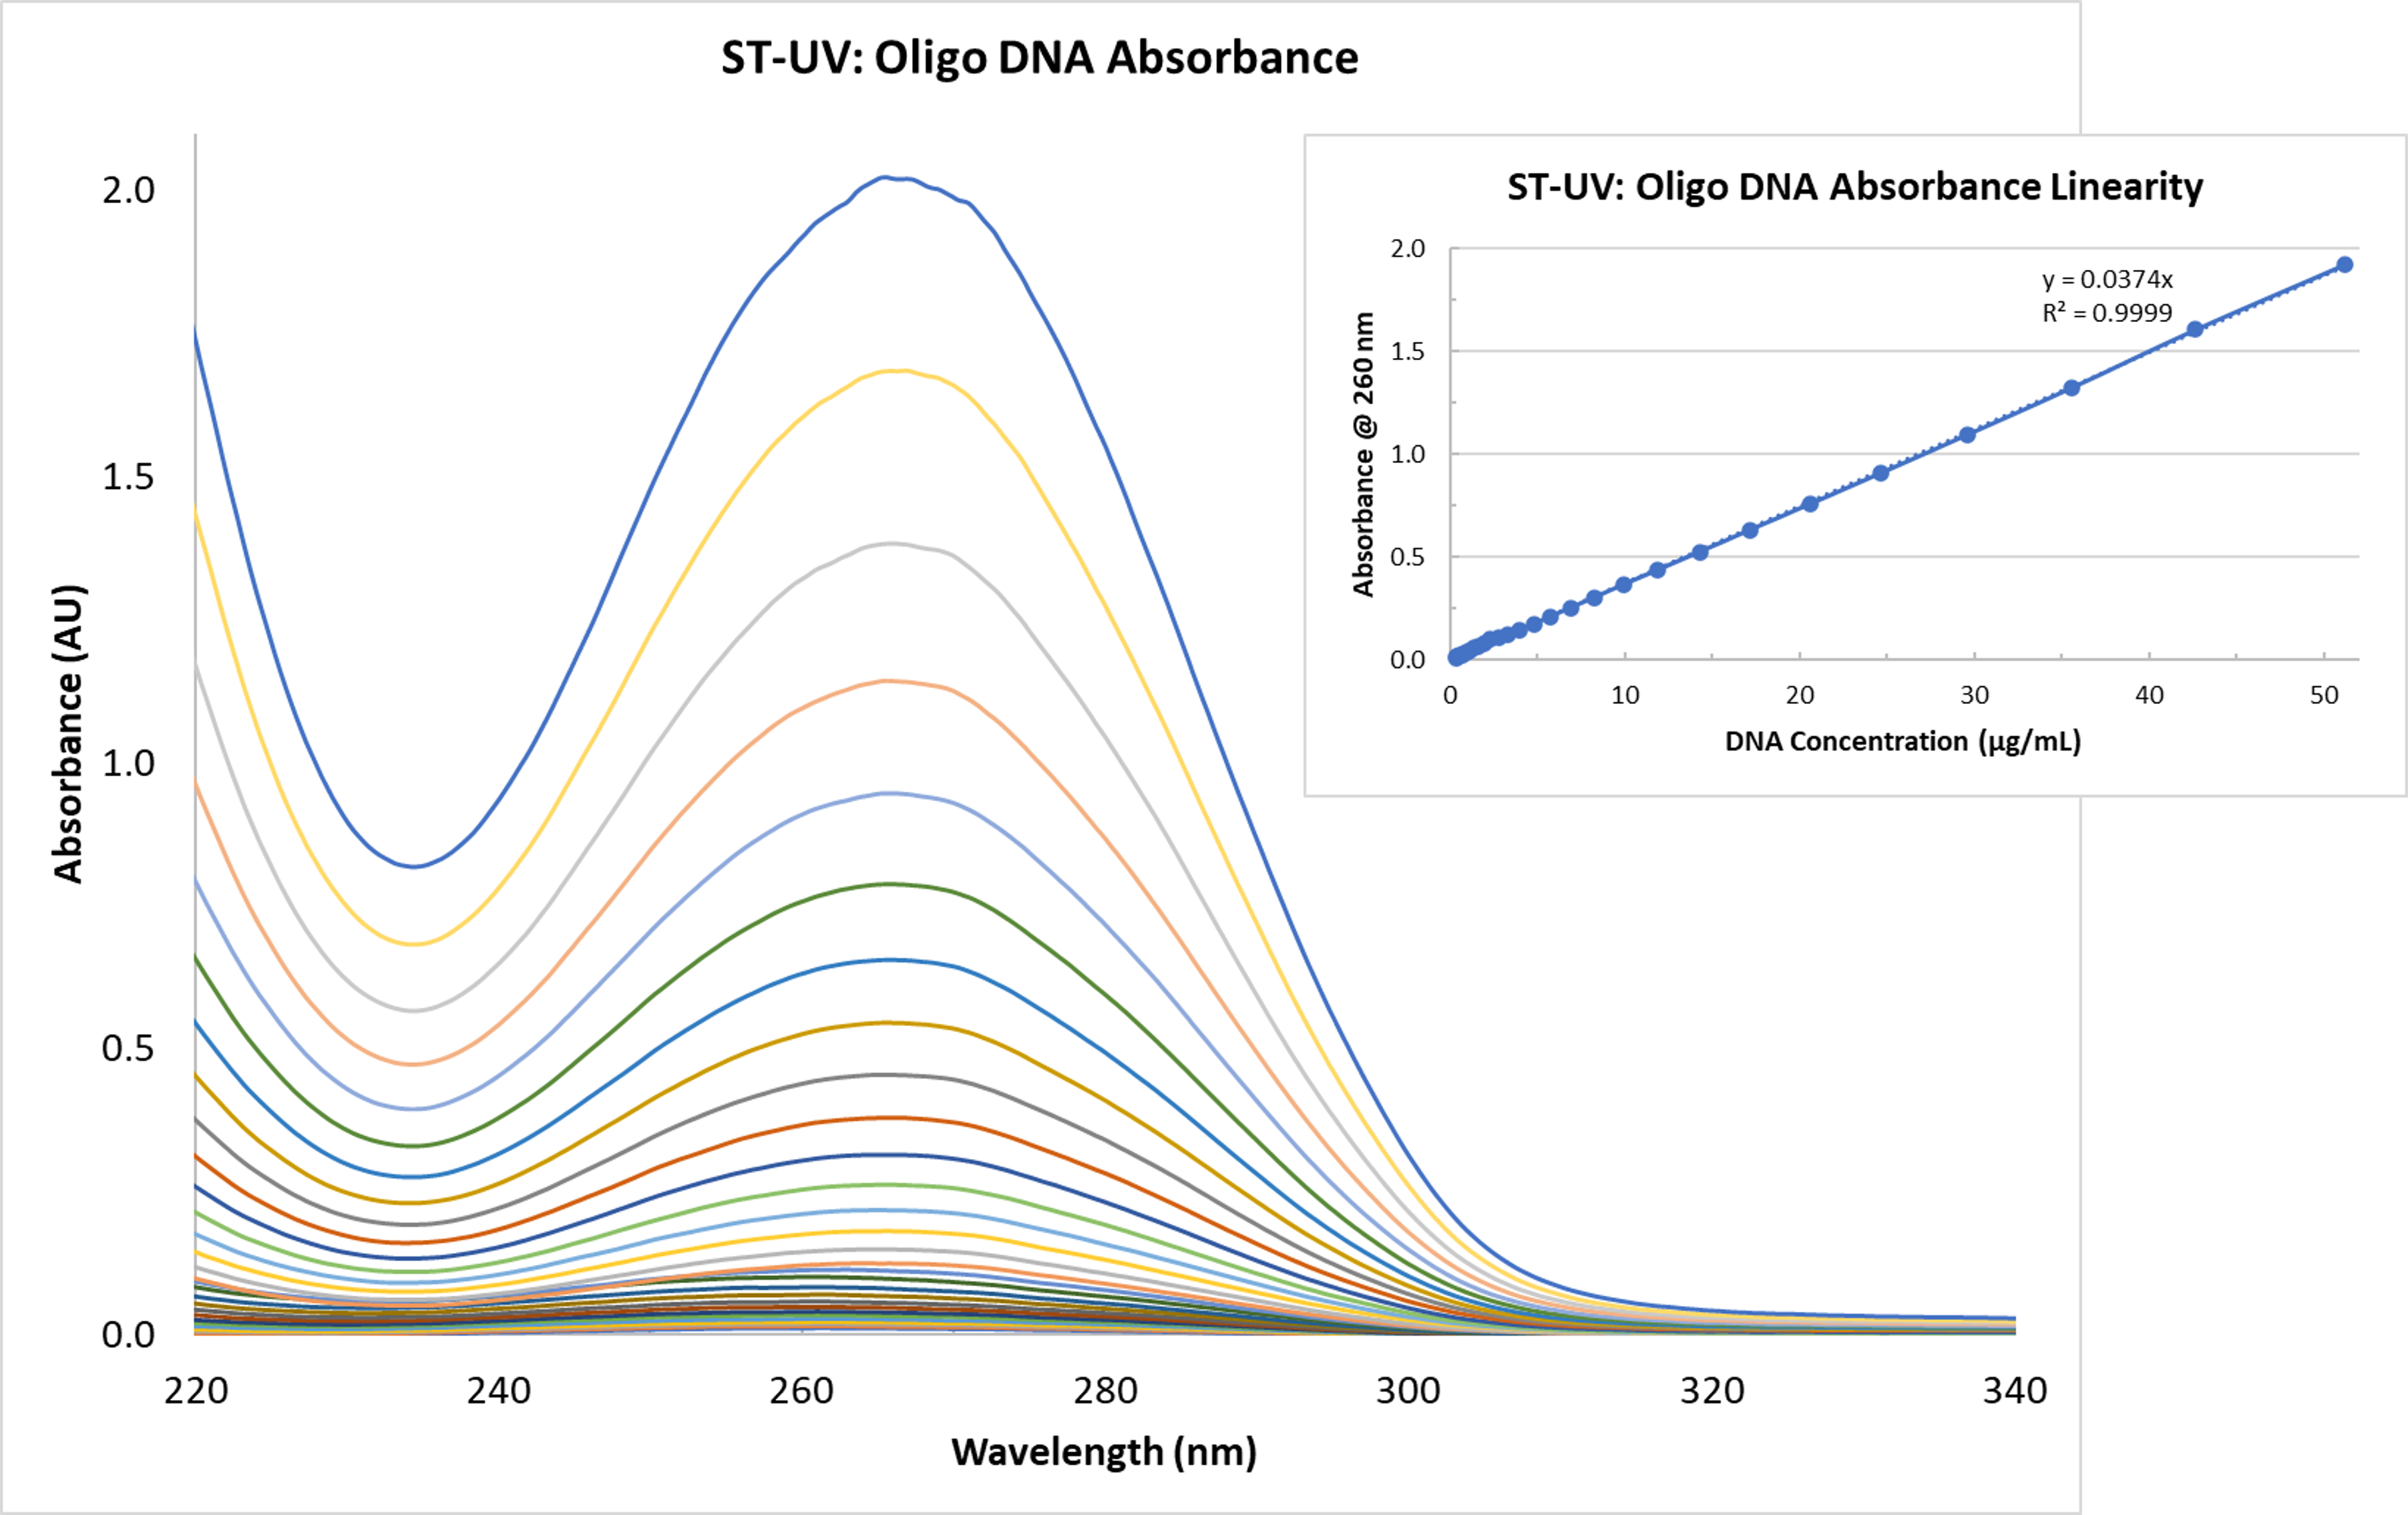 AbsorbanceLinearityBlog_Figure2_OceanST-DNA-Abs-oligo-with-linearity.png